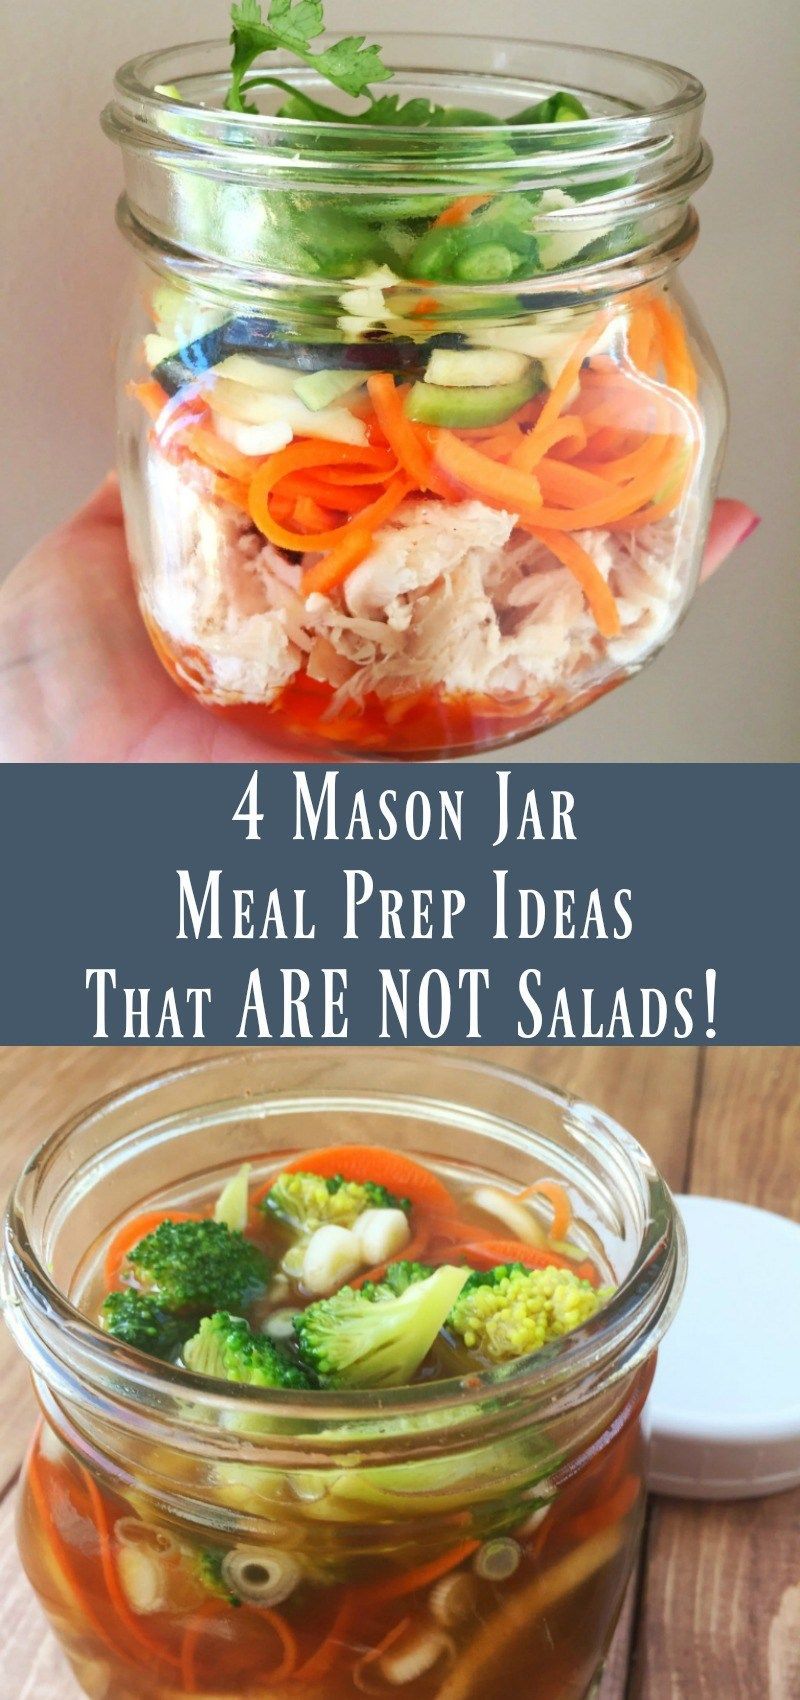 4 Mason Jar Meal Prep Ideas that are not Salads! -   13 healthy recipes Snacks mason jars ideas